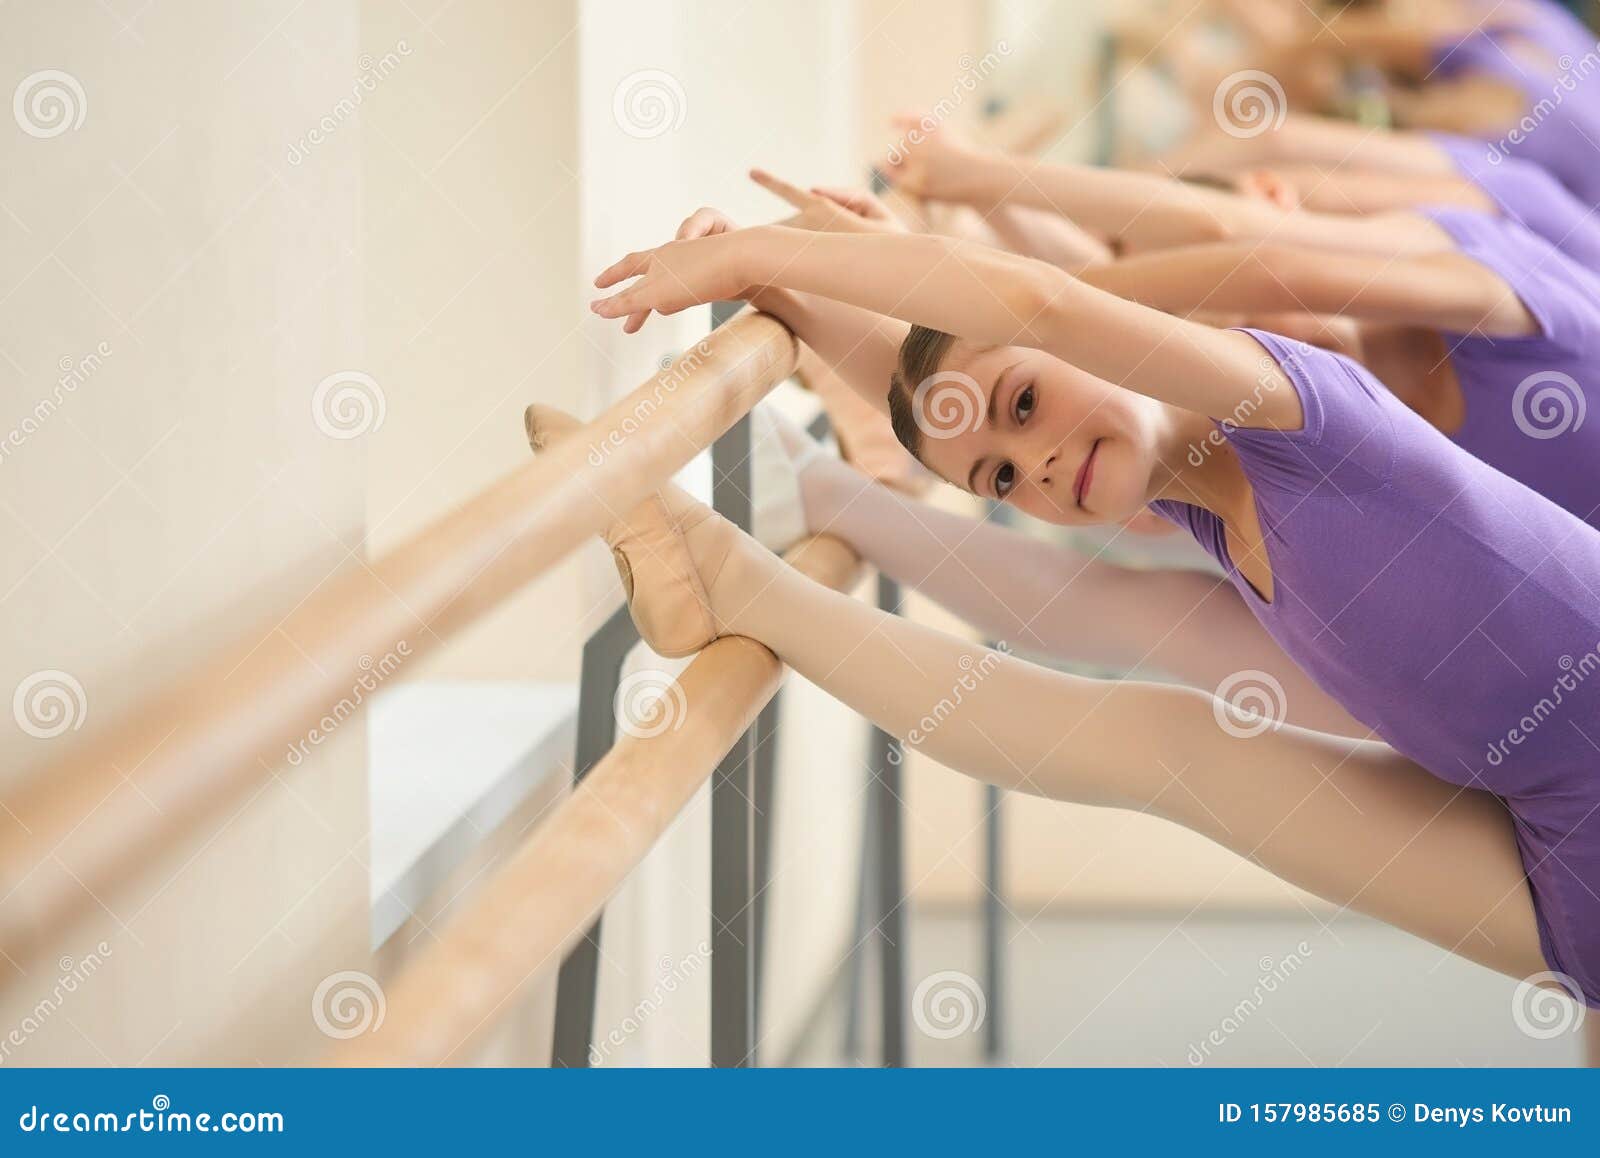 Ballet Girls Stretching On Ballet Barre Stock Image Image Of Goal